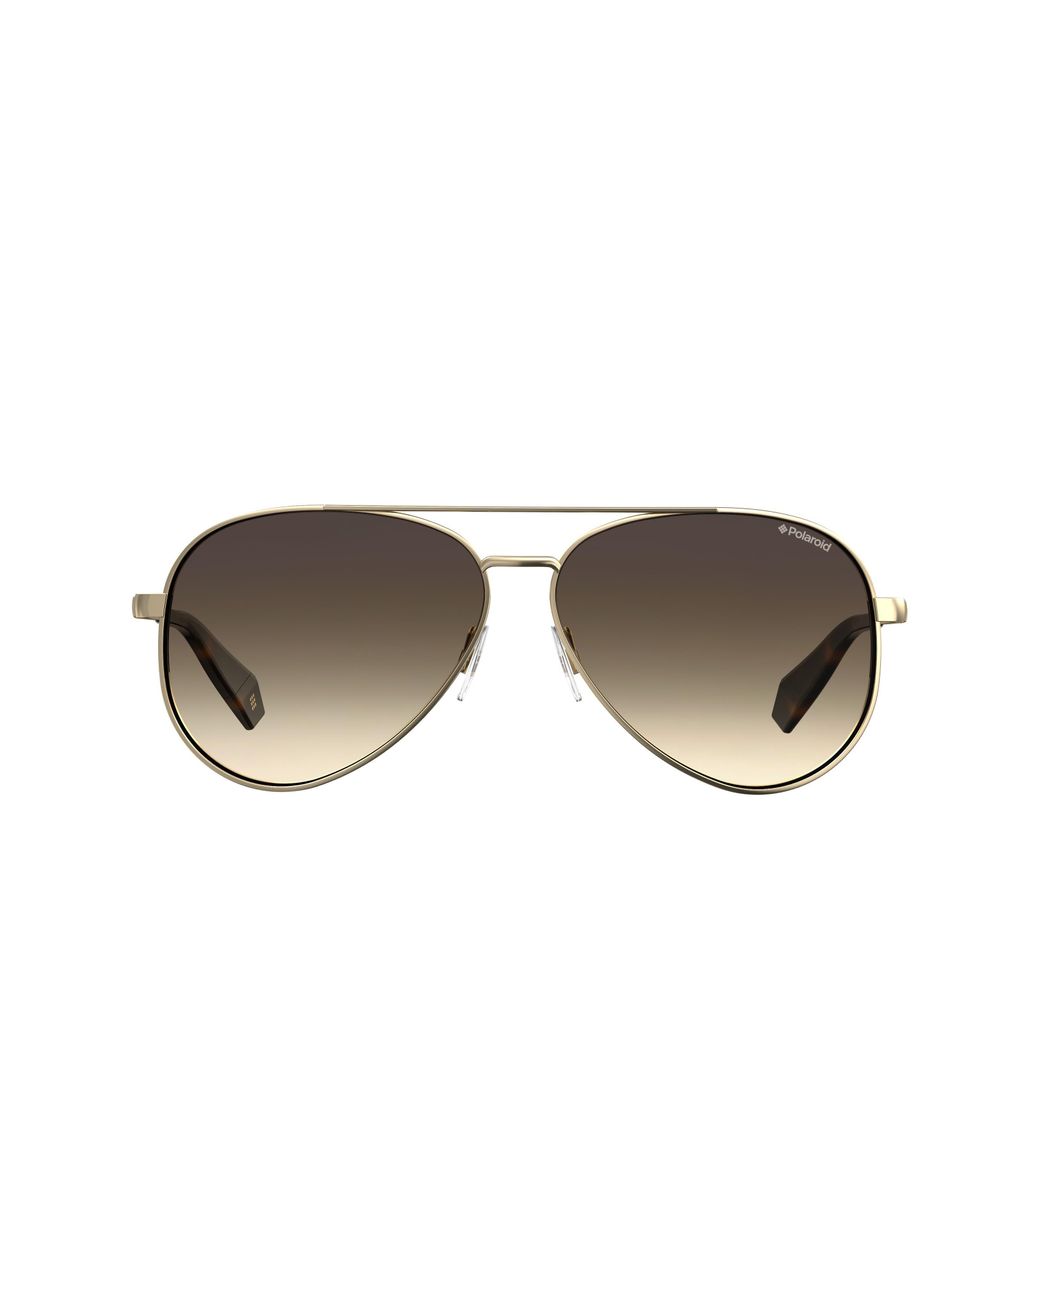 Polaroid 61mm Polarized Aviator Sunglasses in Gold (Metallic) - Lyst